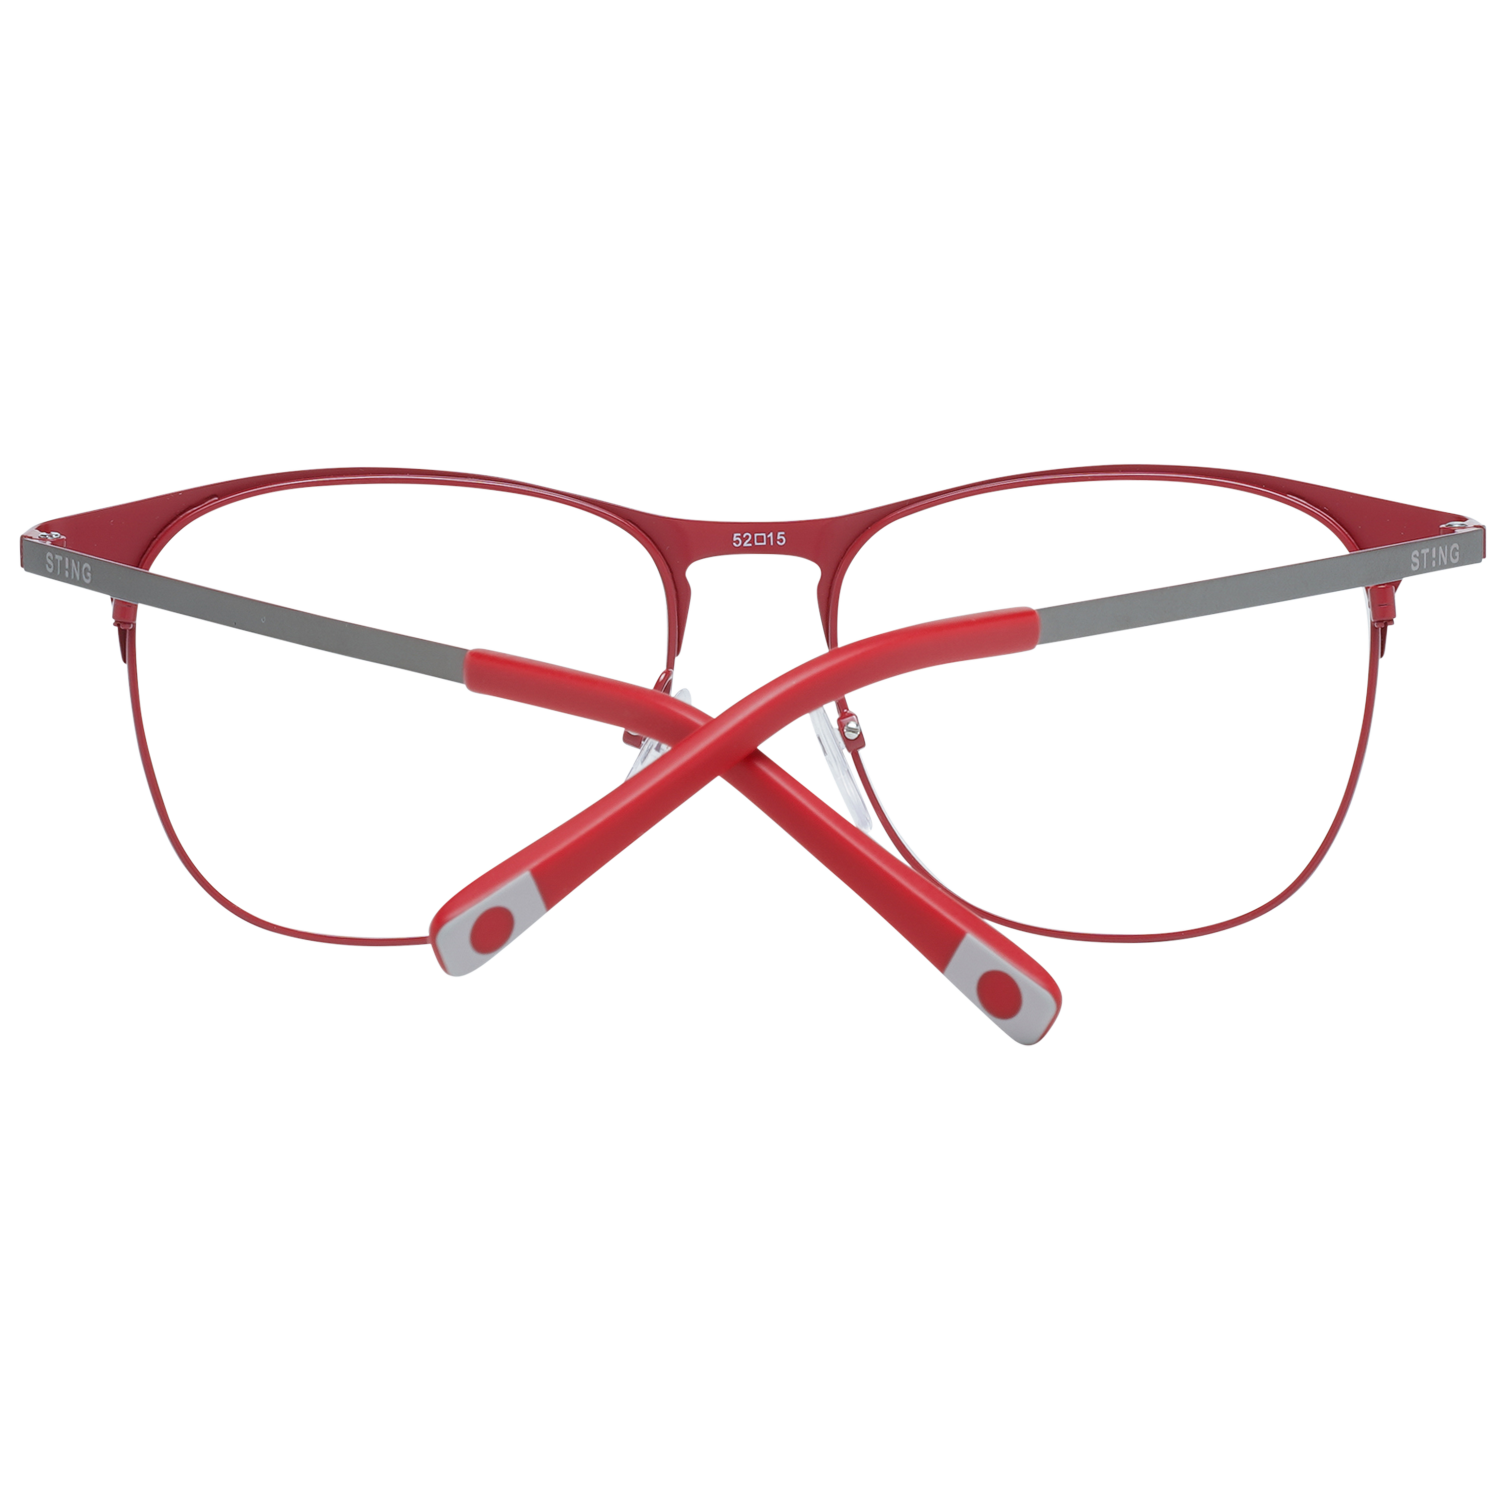 Sting Frames Sting Optical Frame VST017 08K5 52 Eyeglasses Eyewear UK USA Australia 